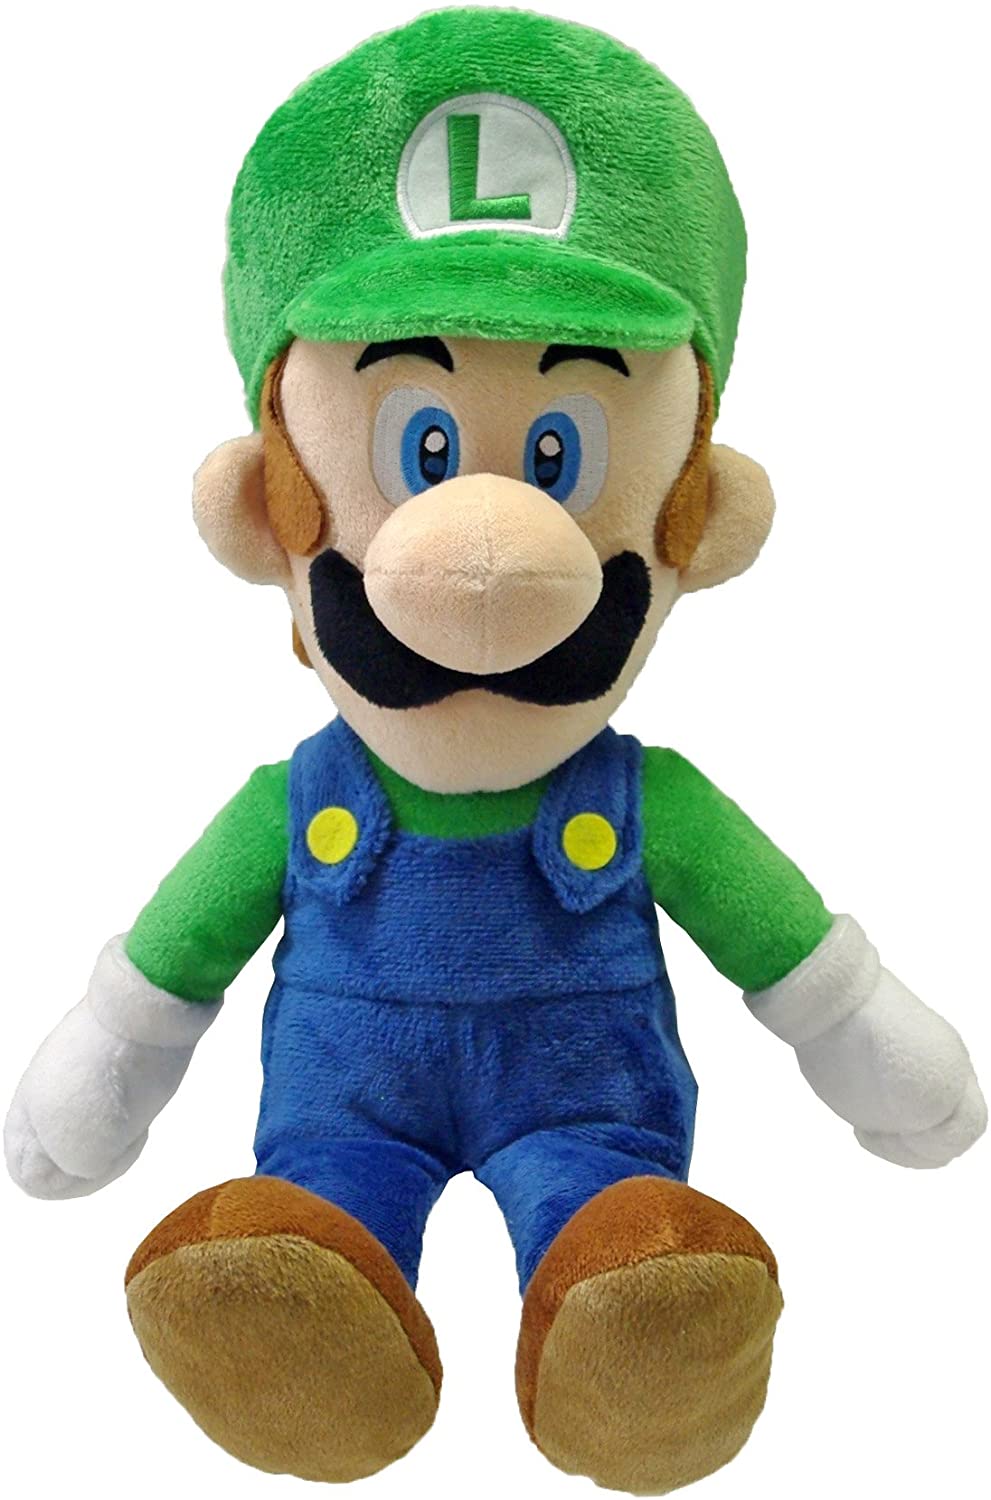 Nintendo Merc Luigi plüsch 21cm [German Version]